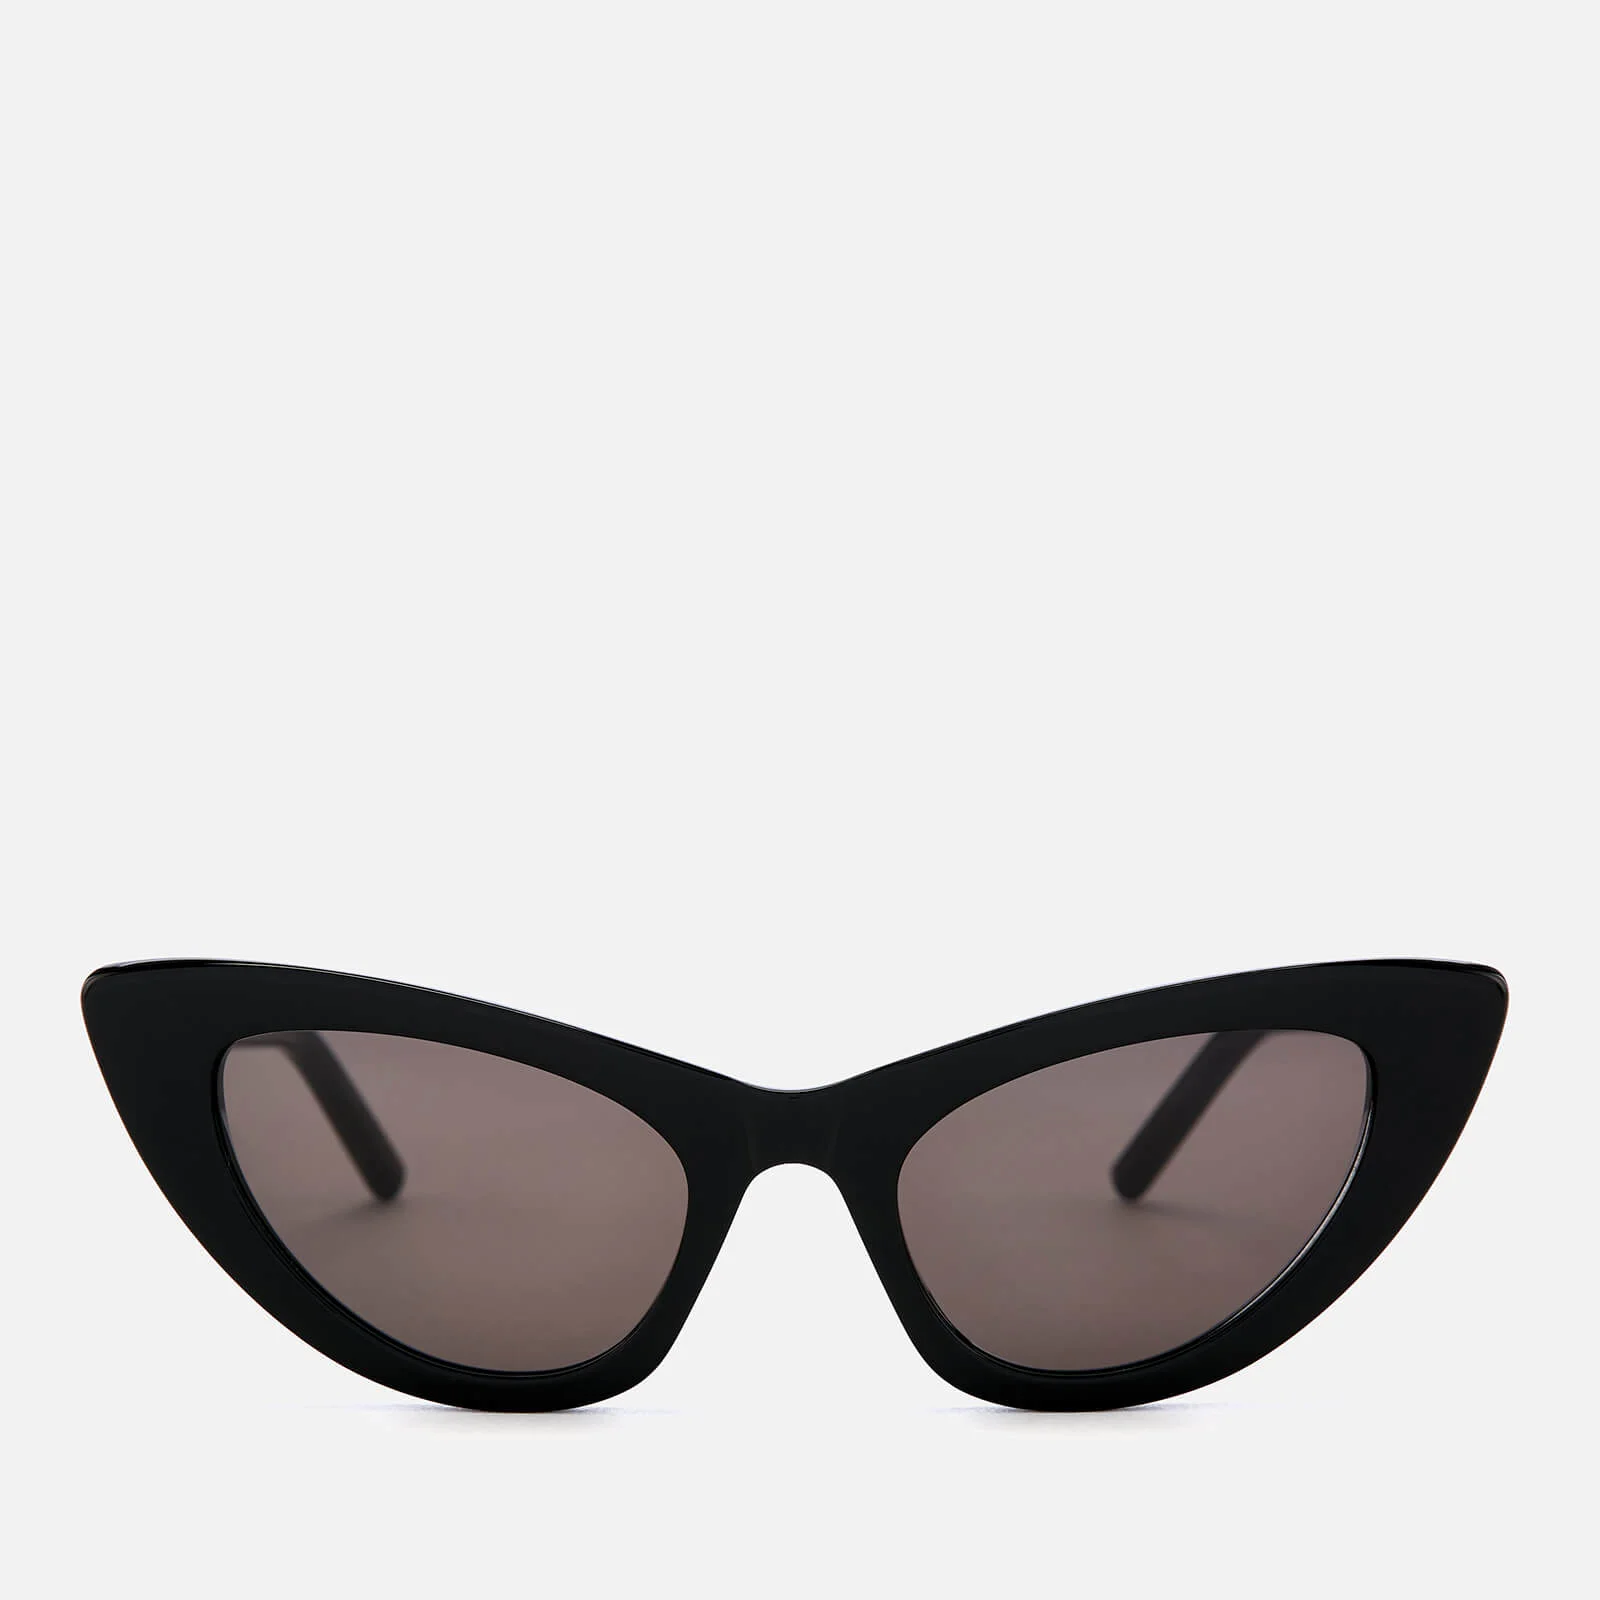 Saint Laurent Women's Lily Cat-Eye Frame Sunglasses - Black Image 1